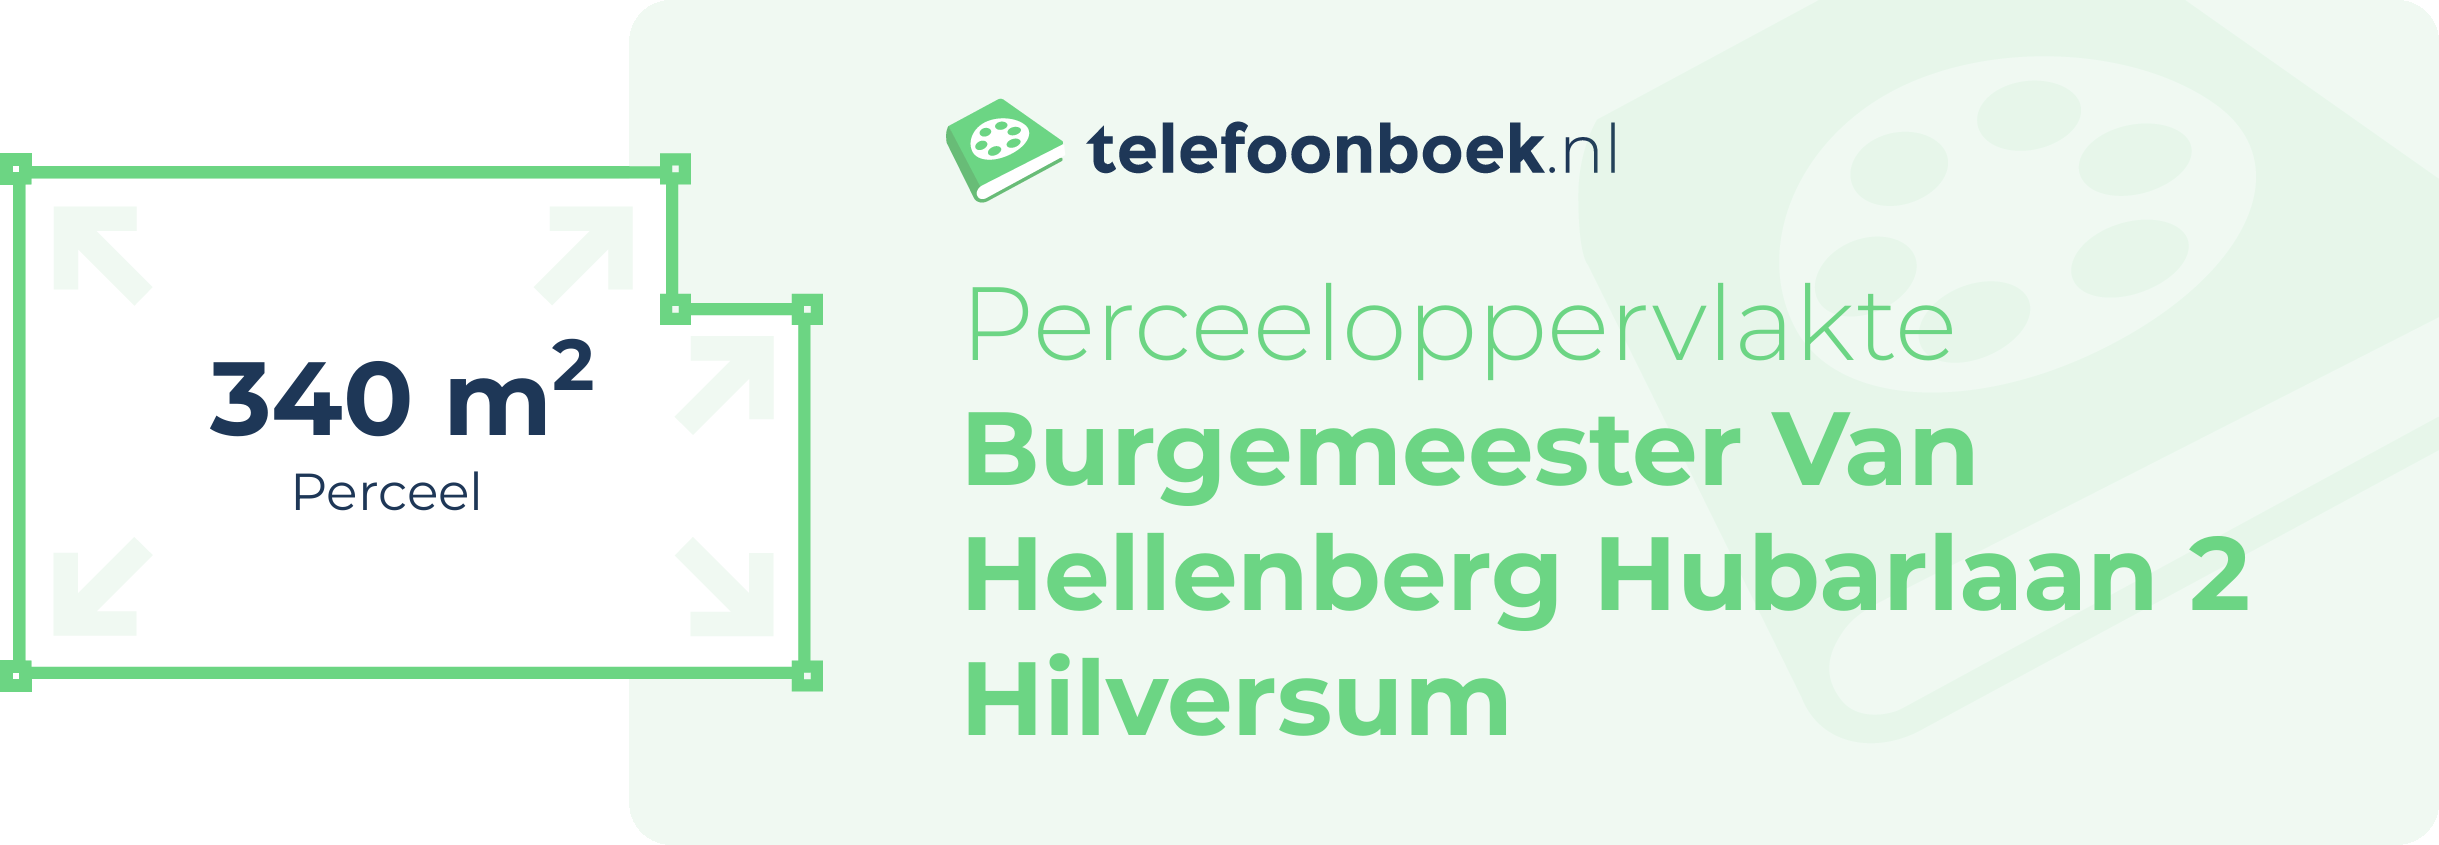 Perceeloppervlakte Burgemeester Van Hellenberg Hubarlaan 2 Hilversum